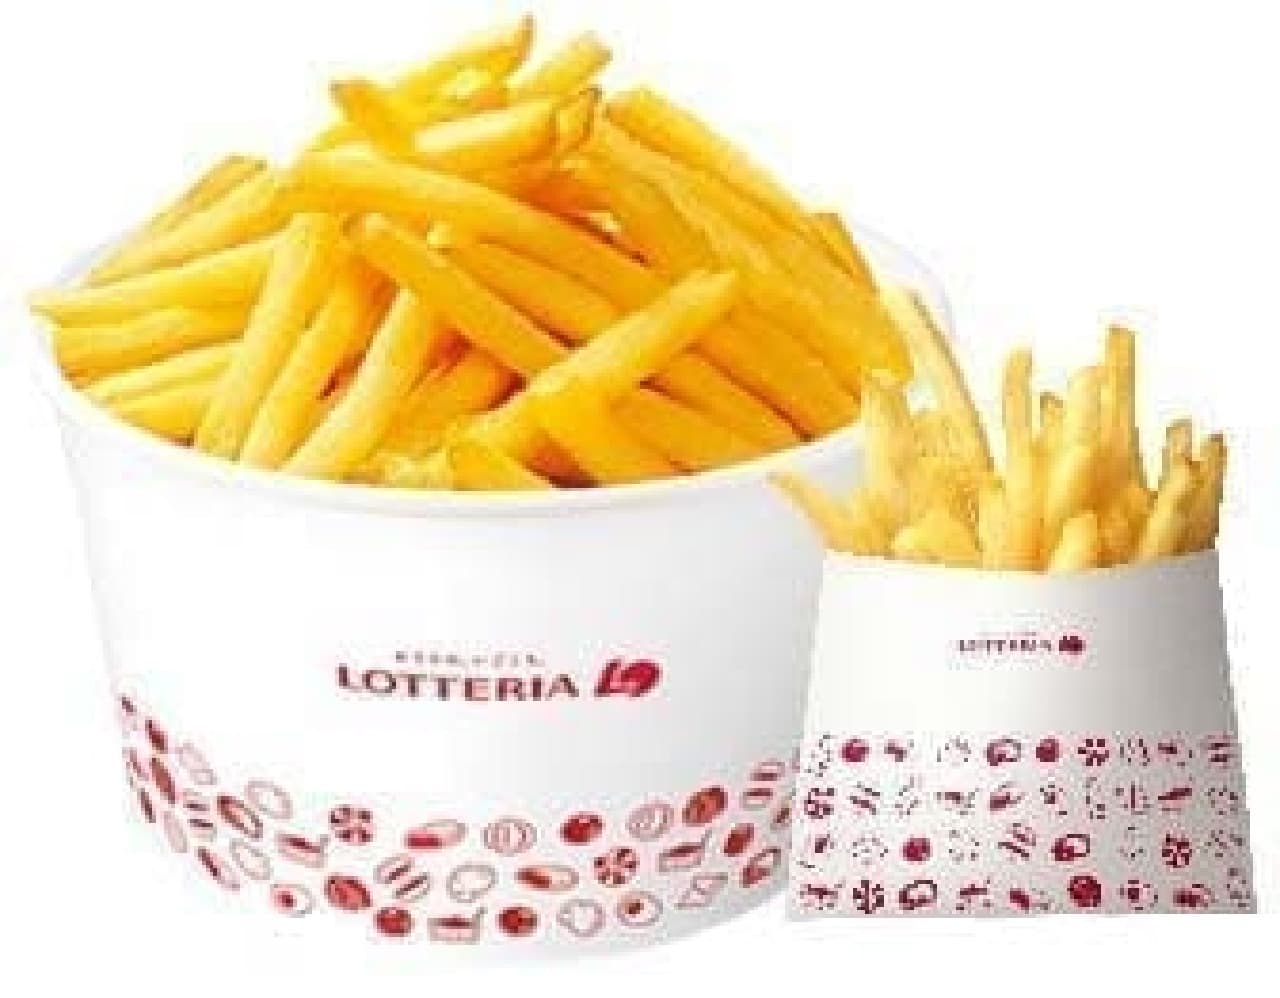 Lotteria "Increased bucket potatoes"